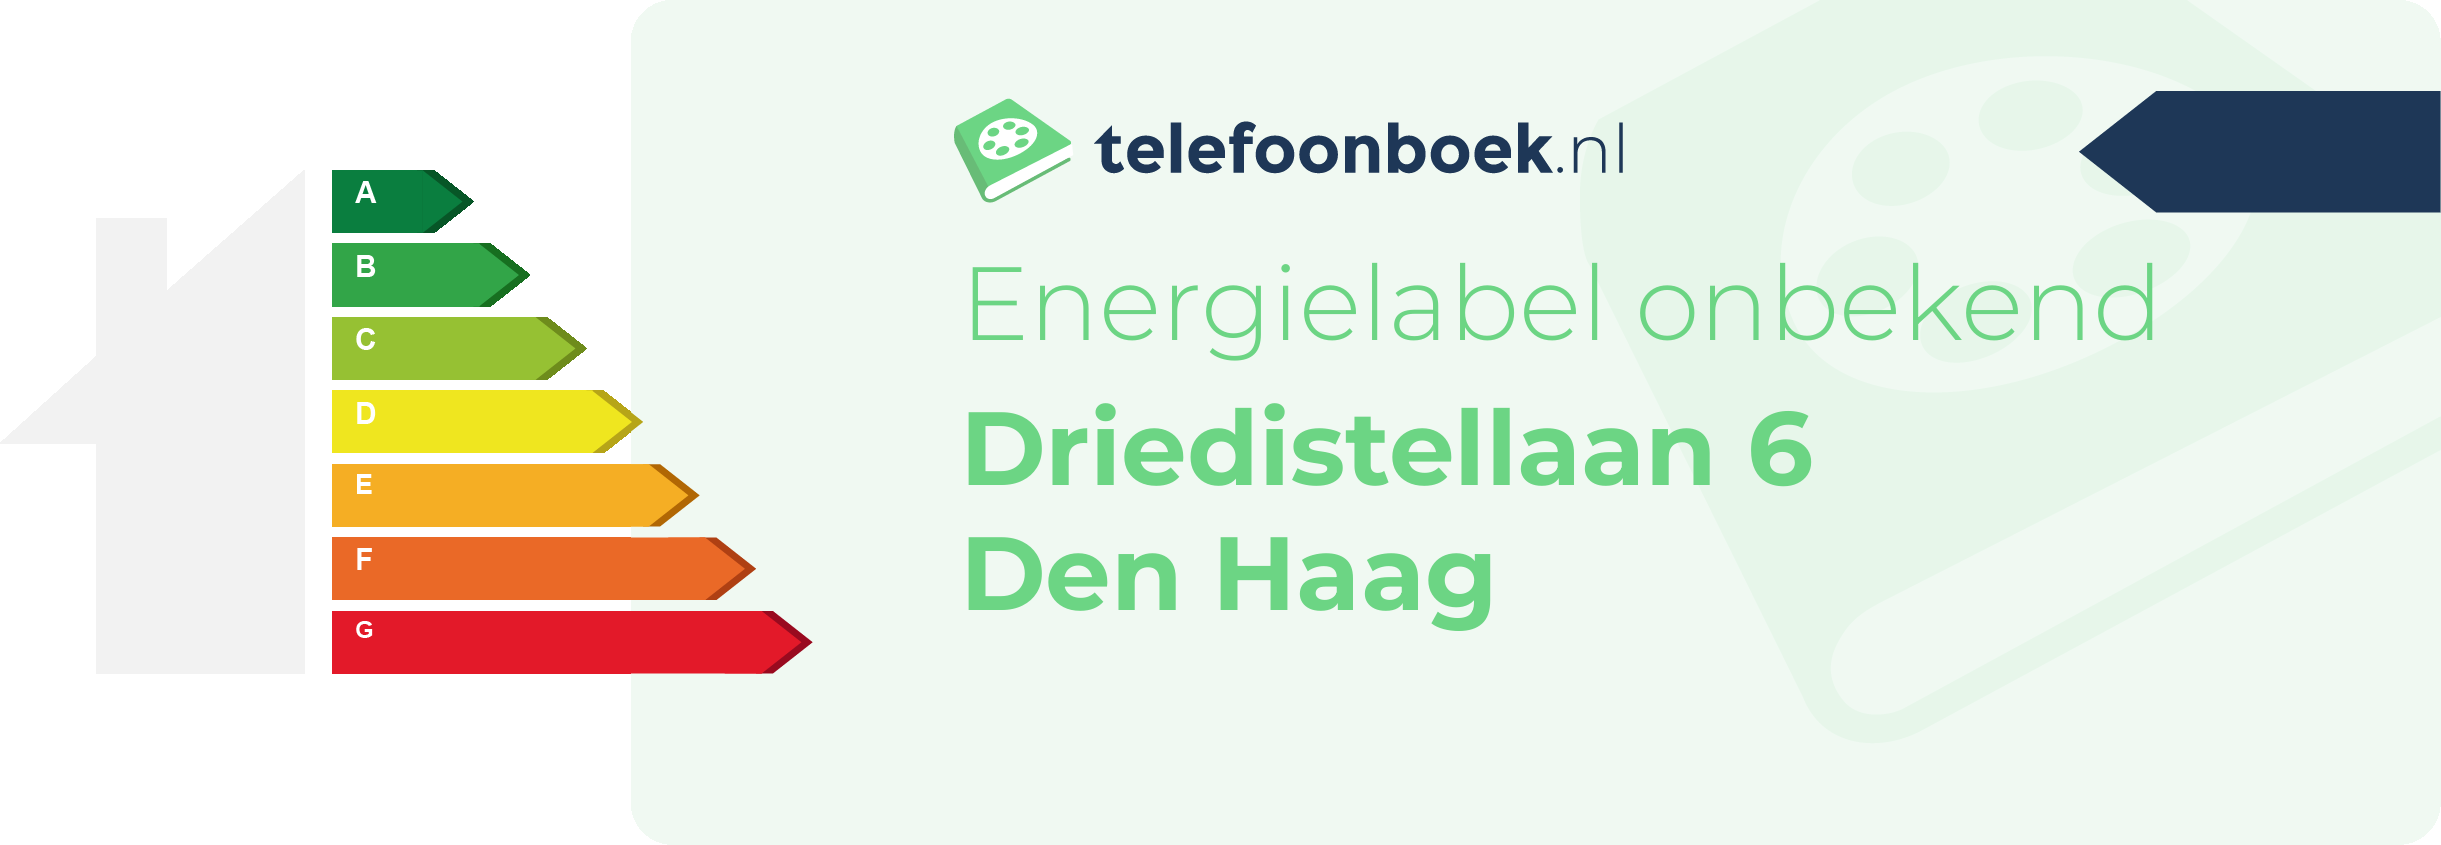 Energielabel Driedistellaan 6 Den Haag